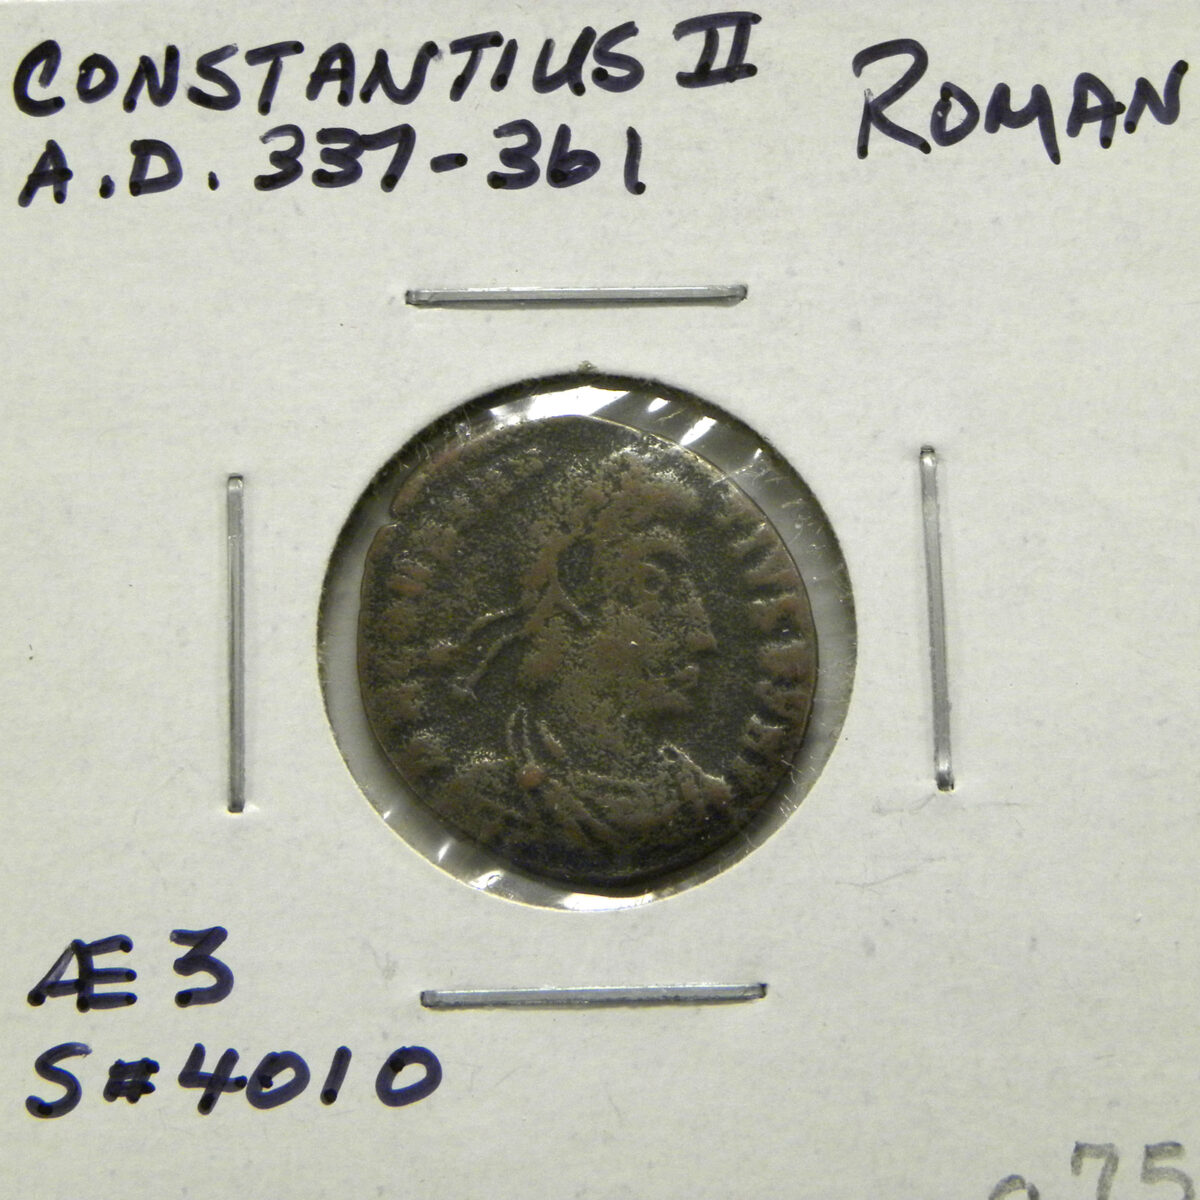 Roman coin #1 in 2x2 (obverse)